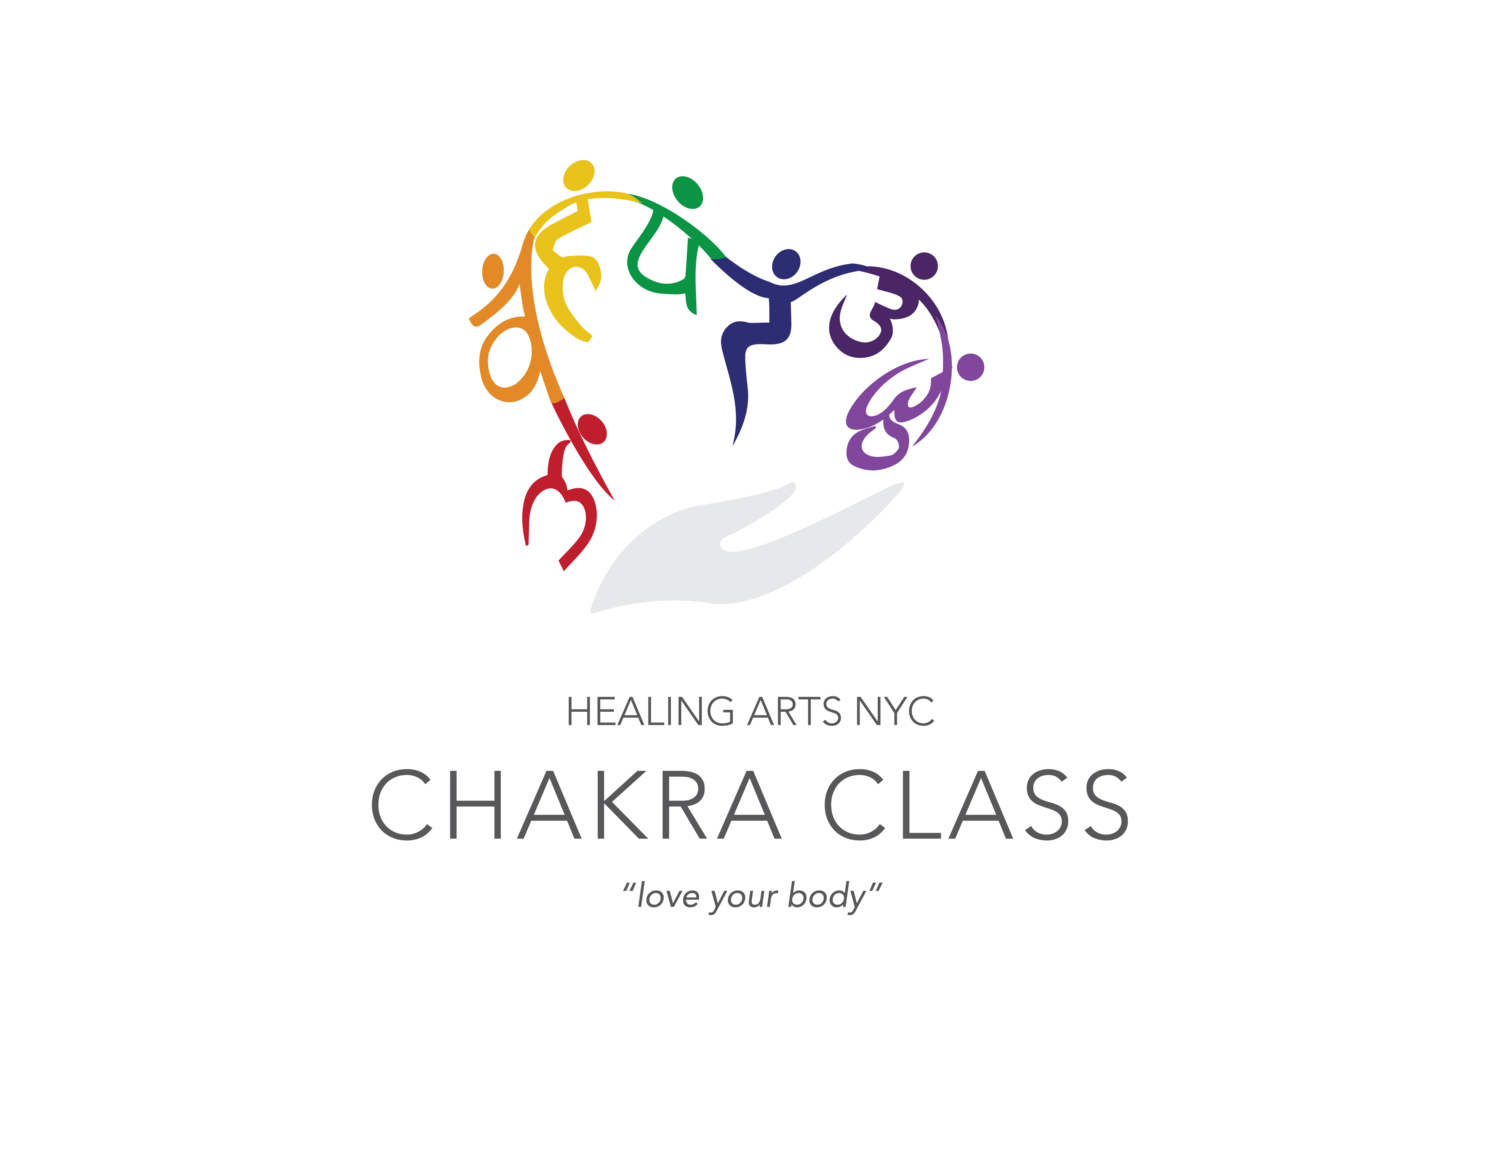 CHAKRAS CLASS - HEALING ARTS NYC